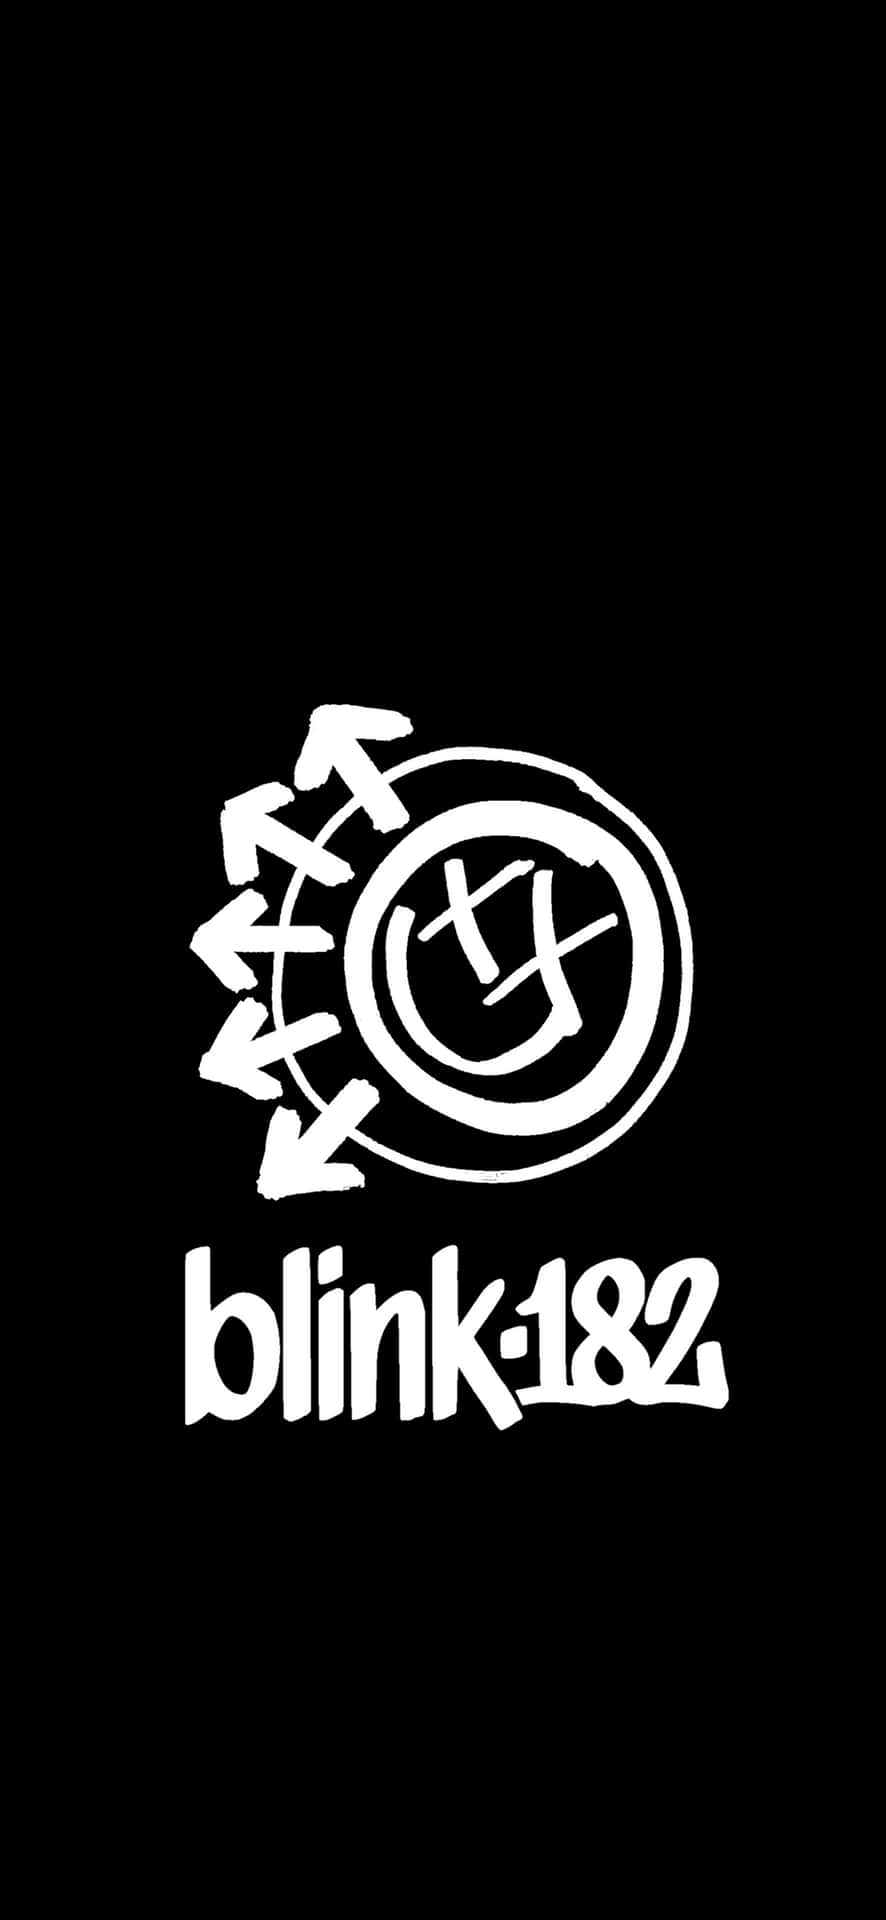 Blink182 Band Logo Black Background Wallpaper